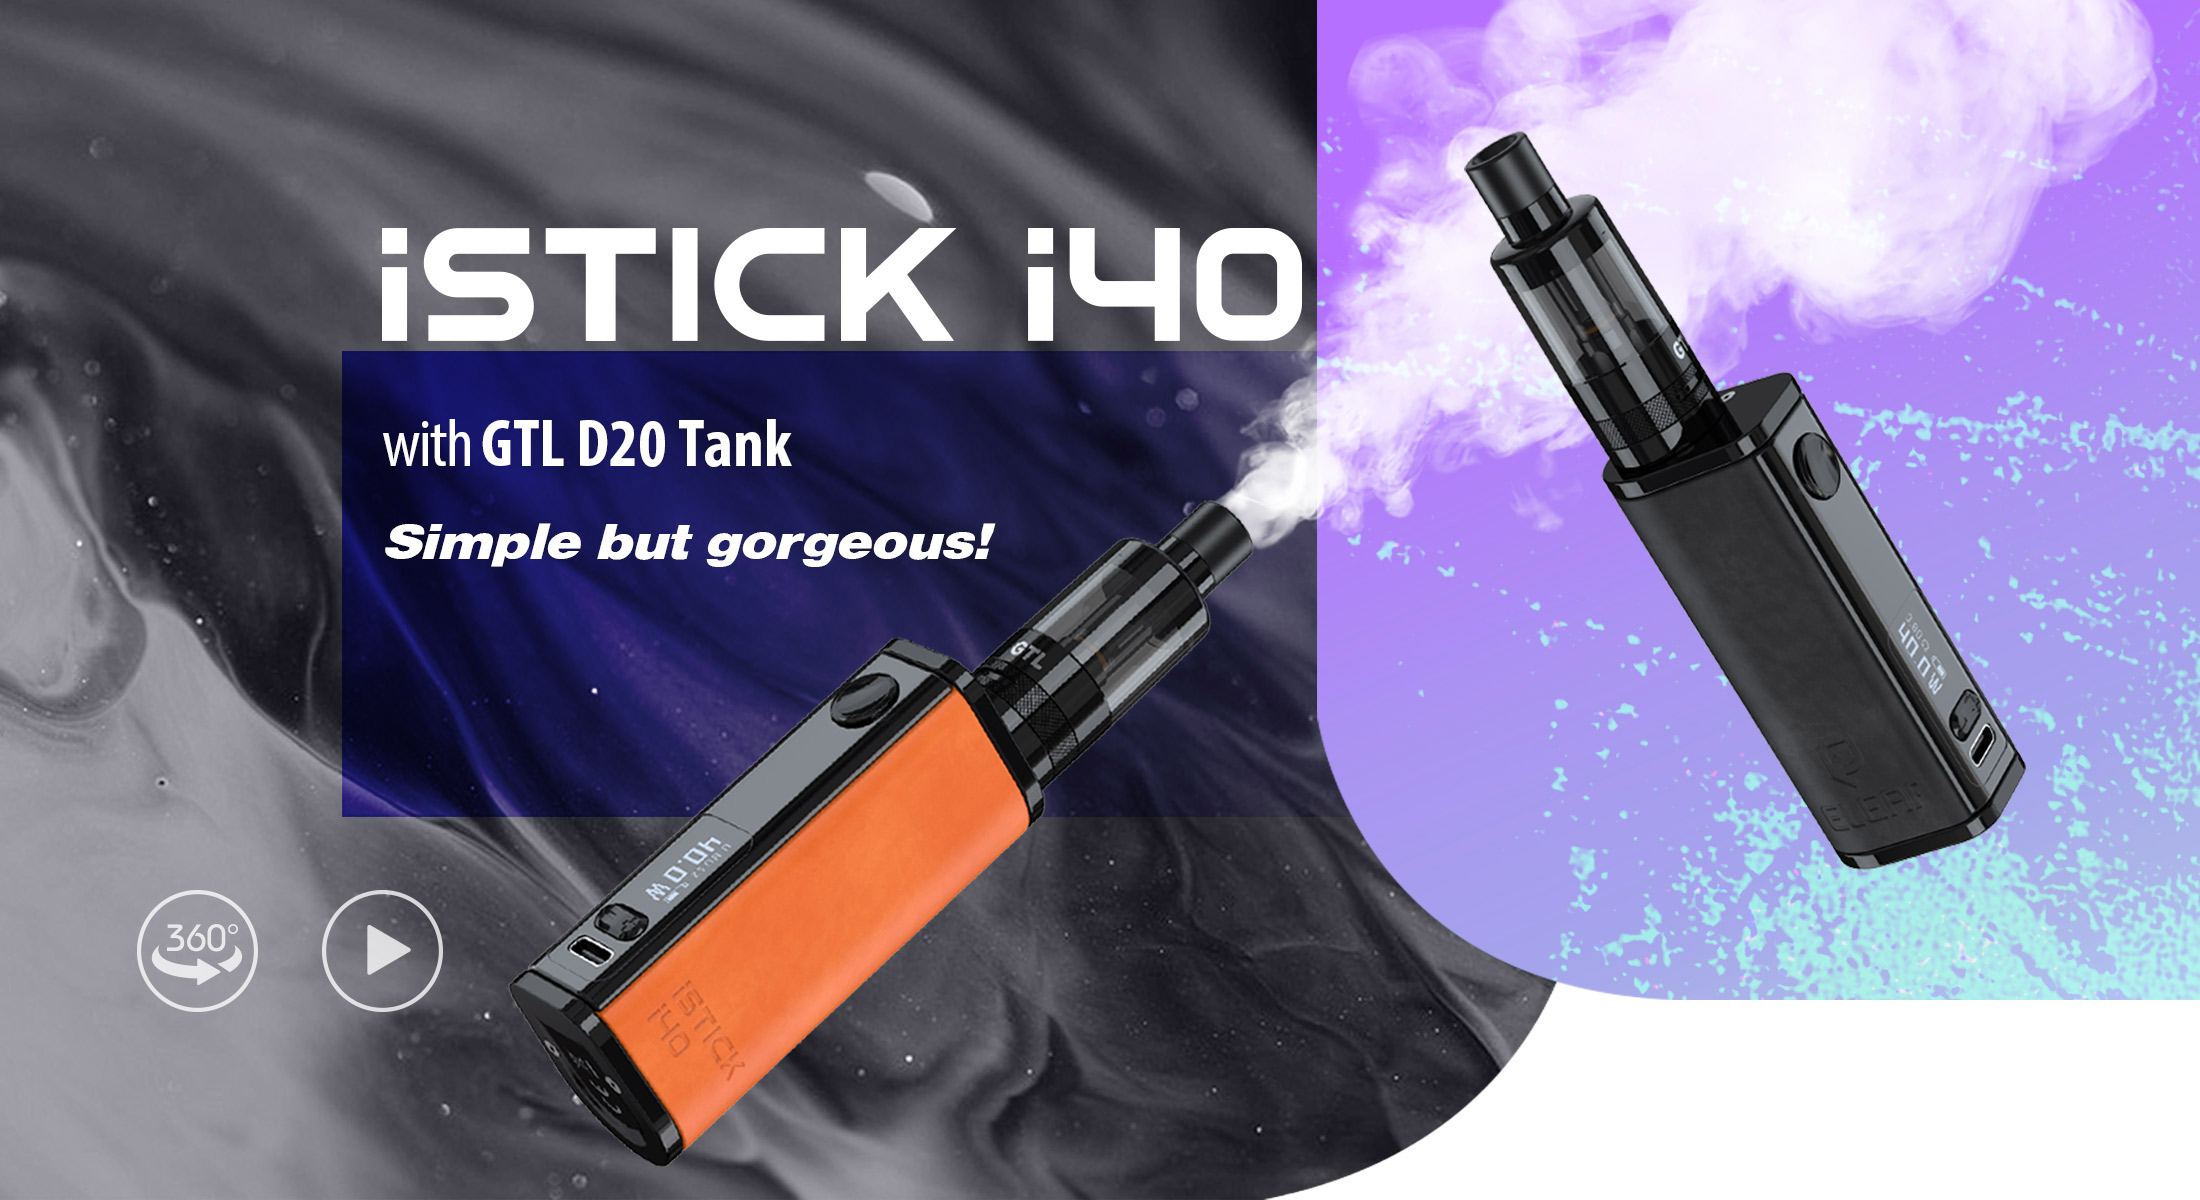 iStick i40 with GTL D20 Tank